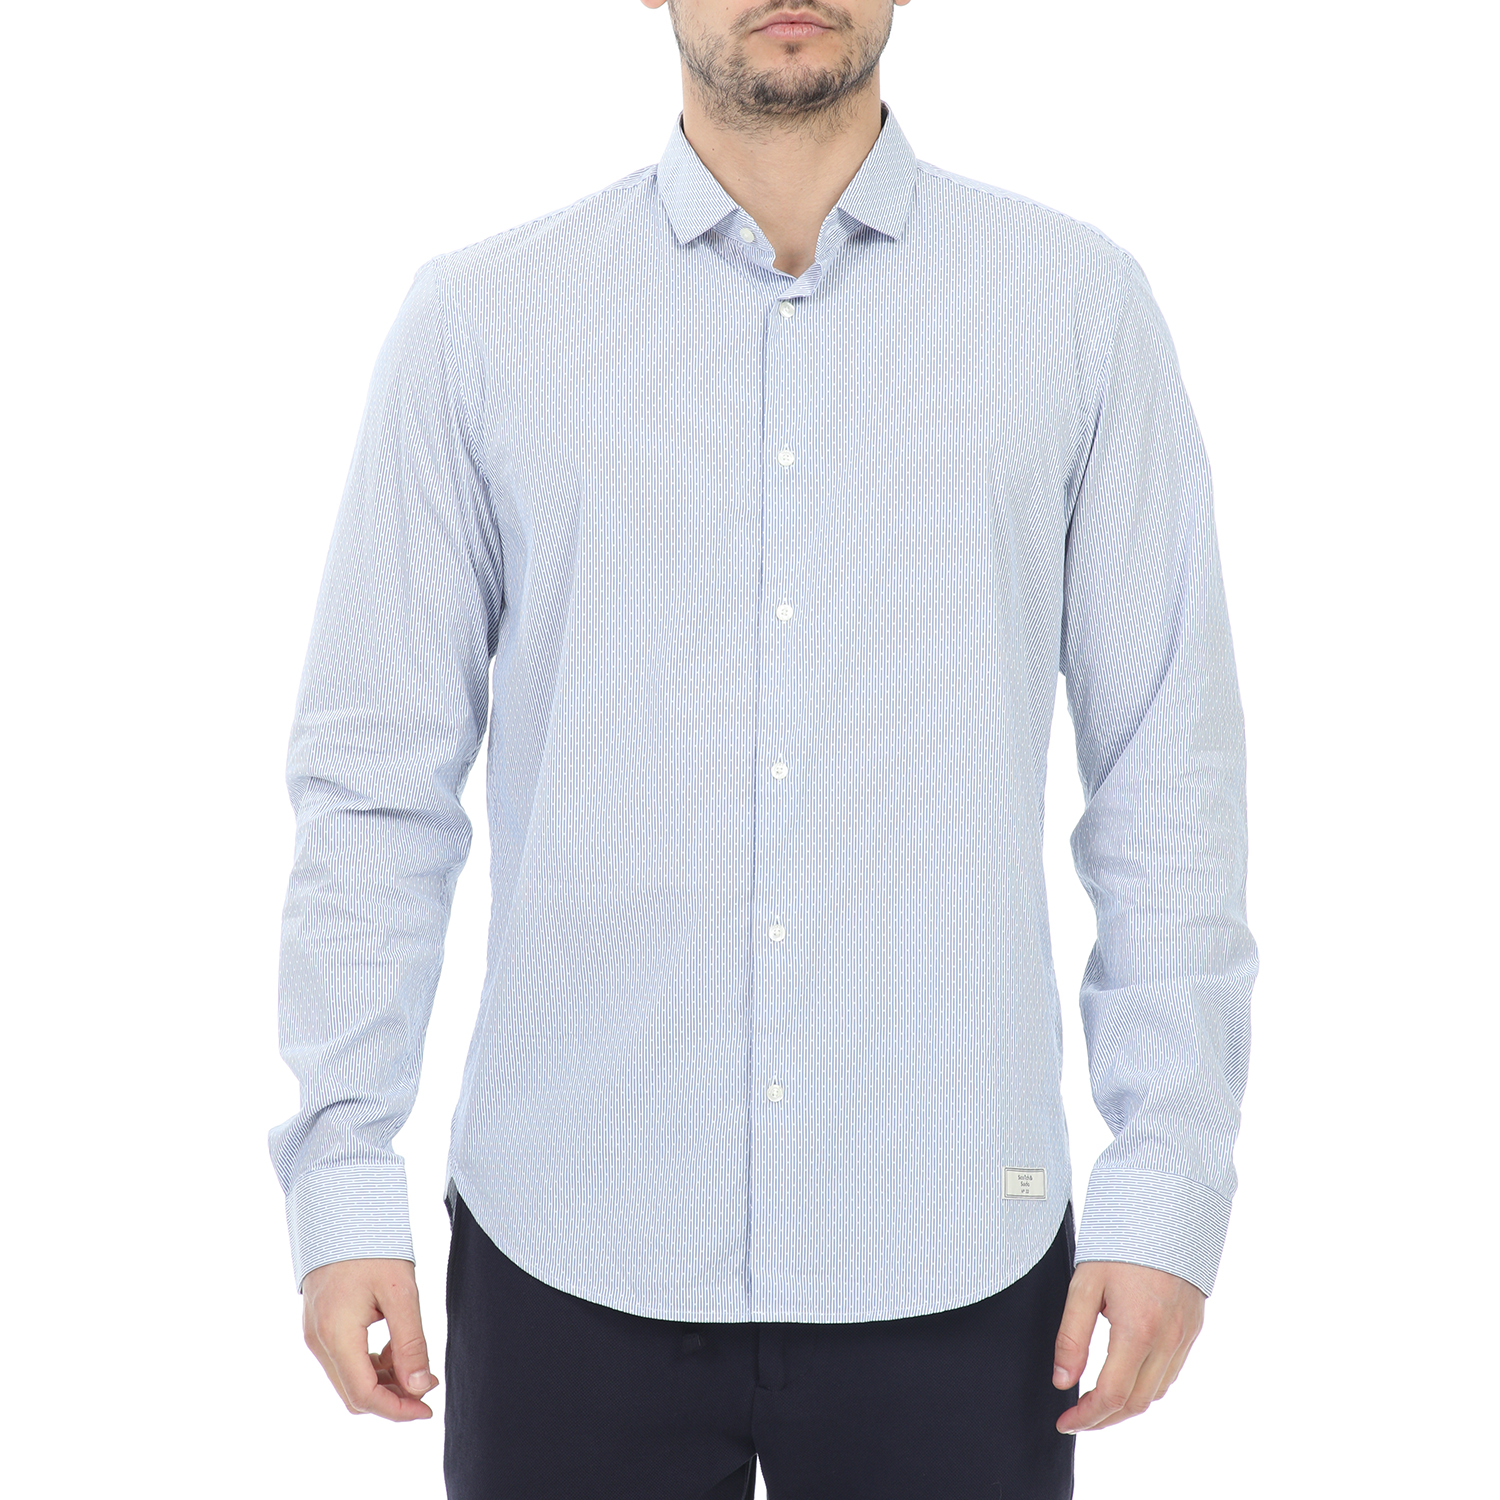 SCOTCH & SODA - Ανδρικό πουκάμισο SCOTCH & SODA μπλε λευκό Ανδρικά/Ρούχα/Πουκάμισα/Μακρυμάνικα